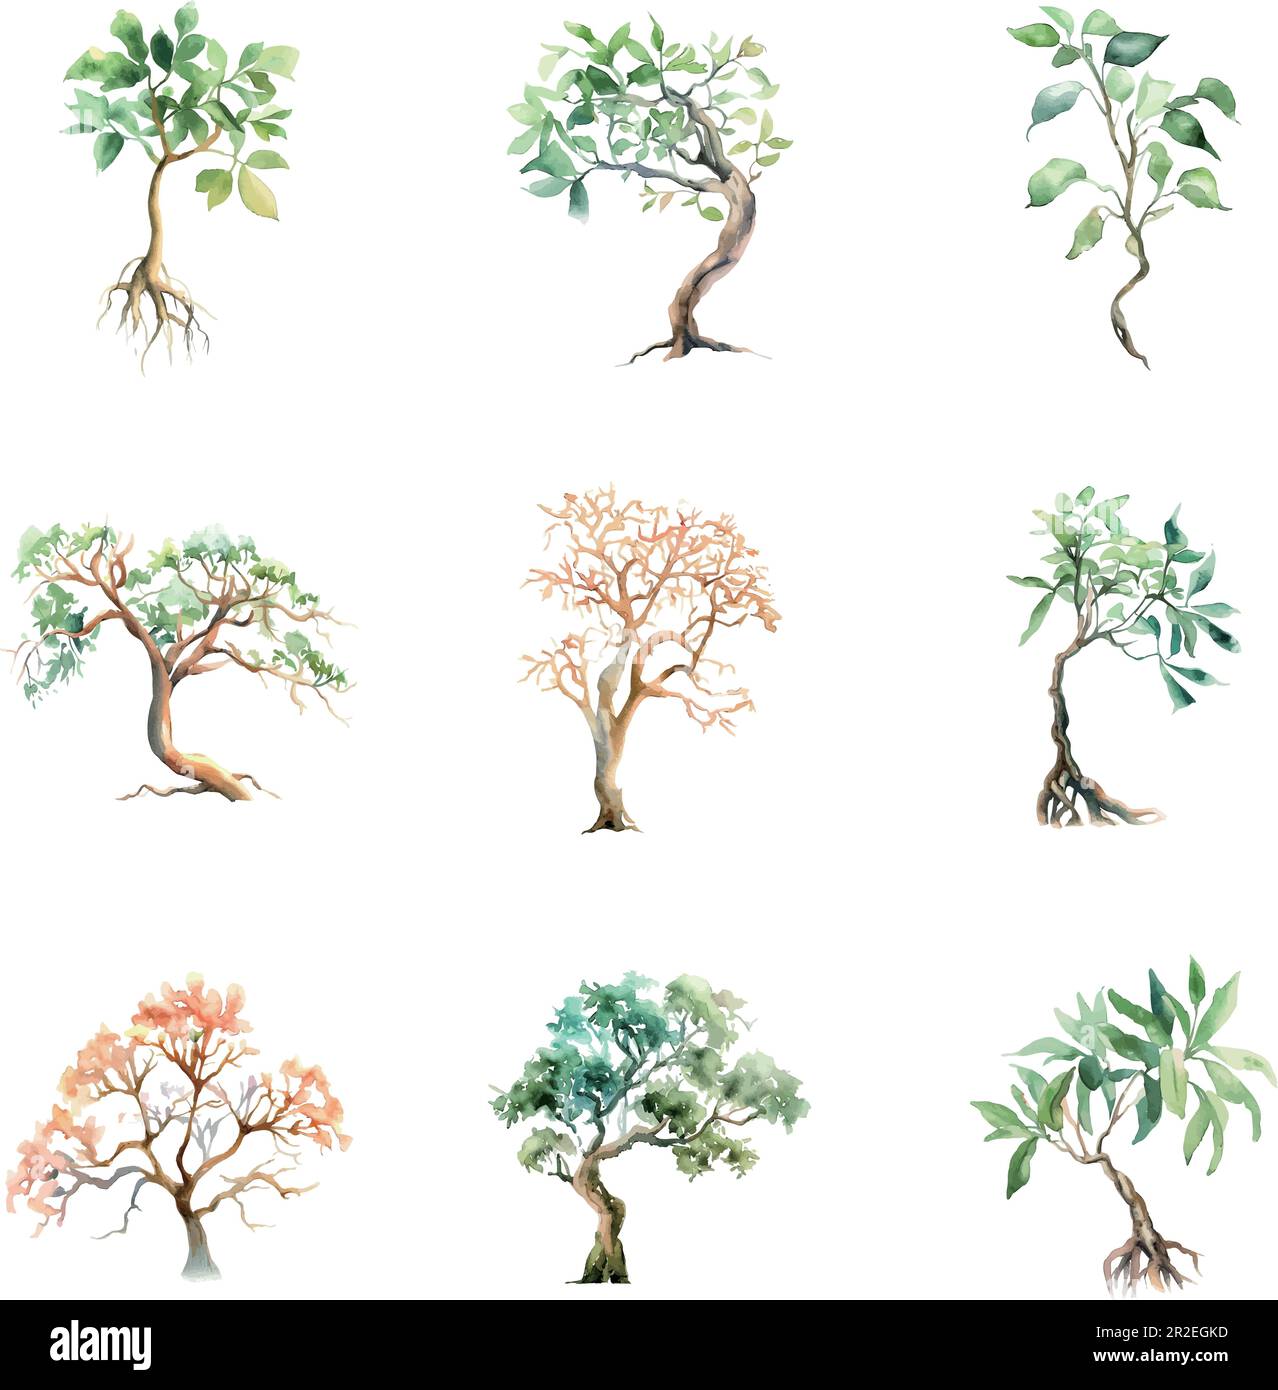 Radermachera sinica.Watercolor tree set. Hand drawn illustration isolated on white background. Stock Vector